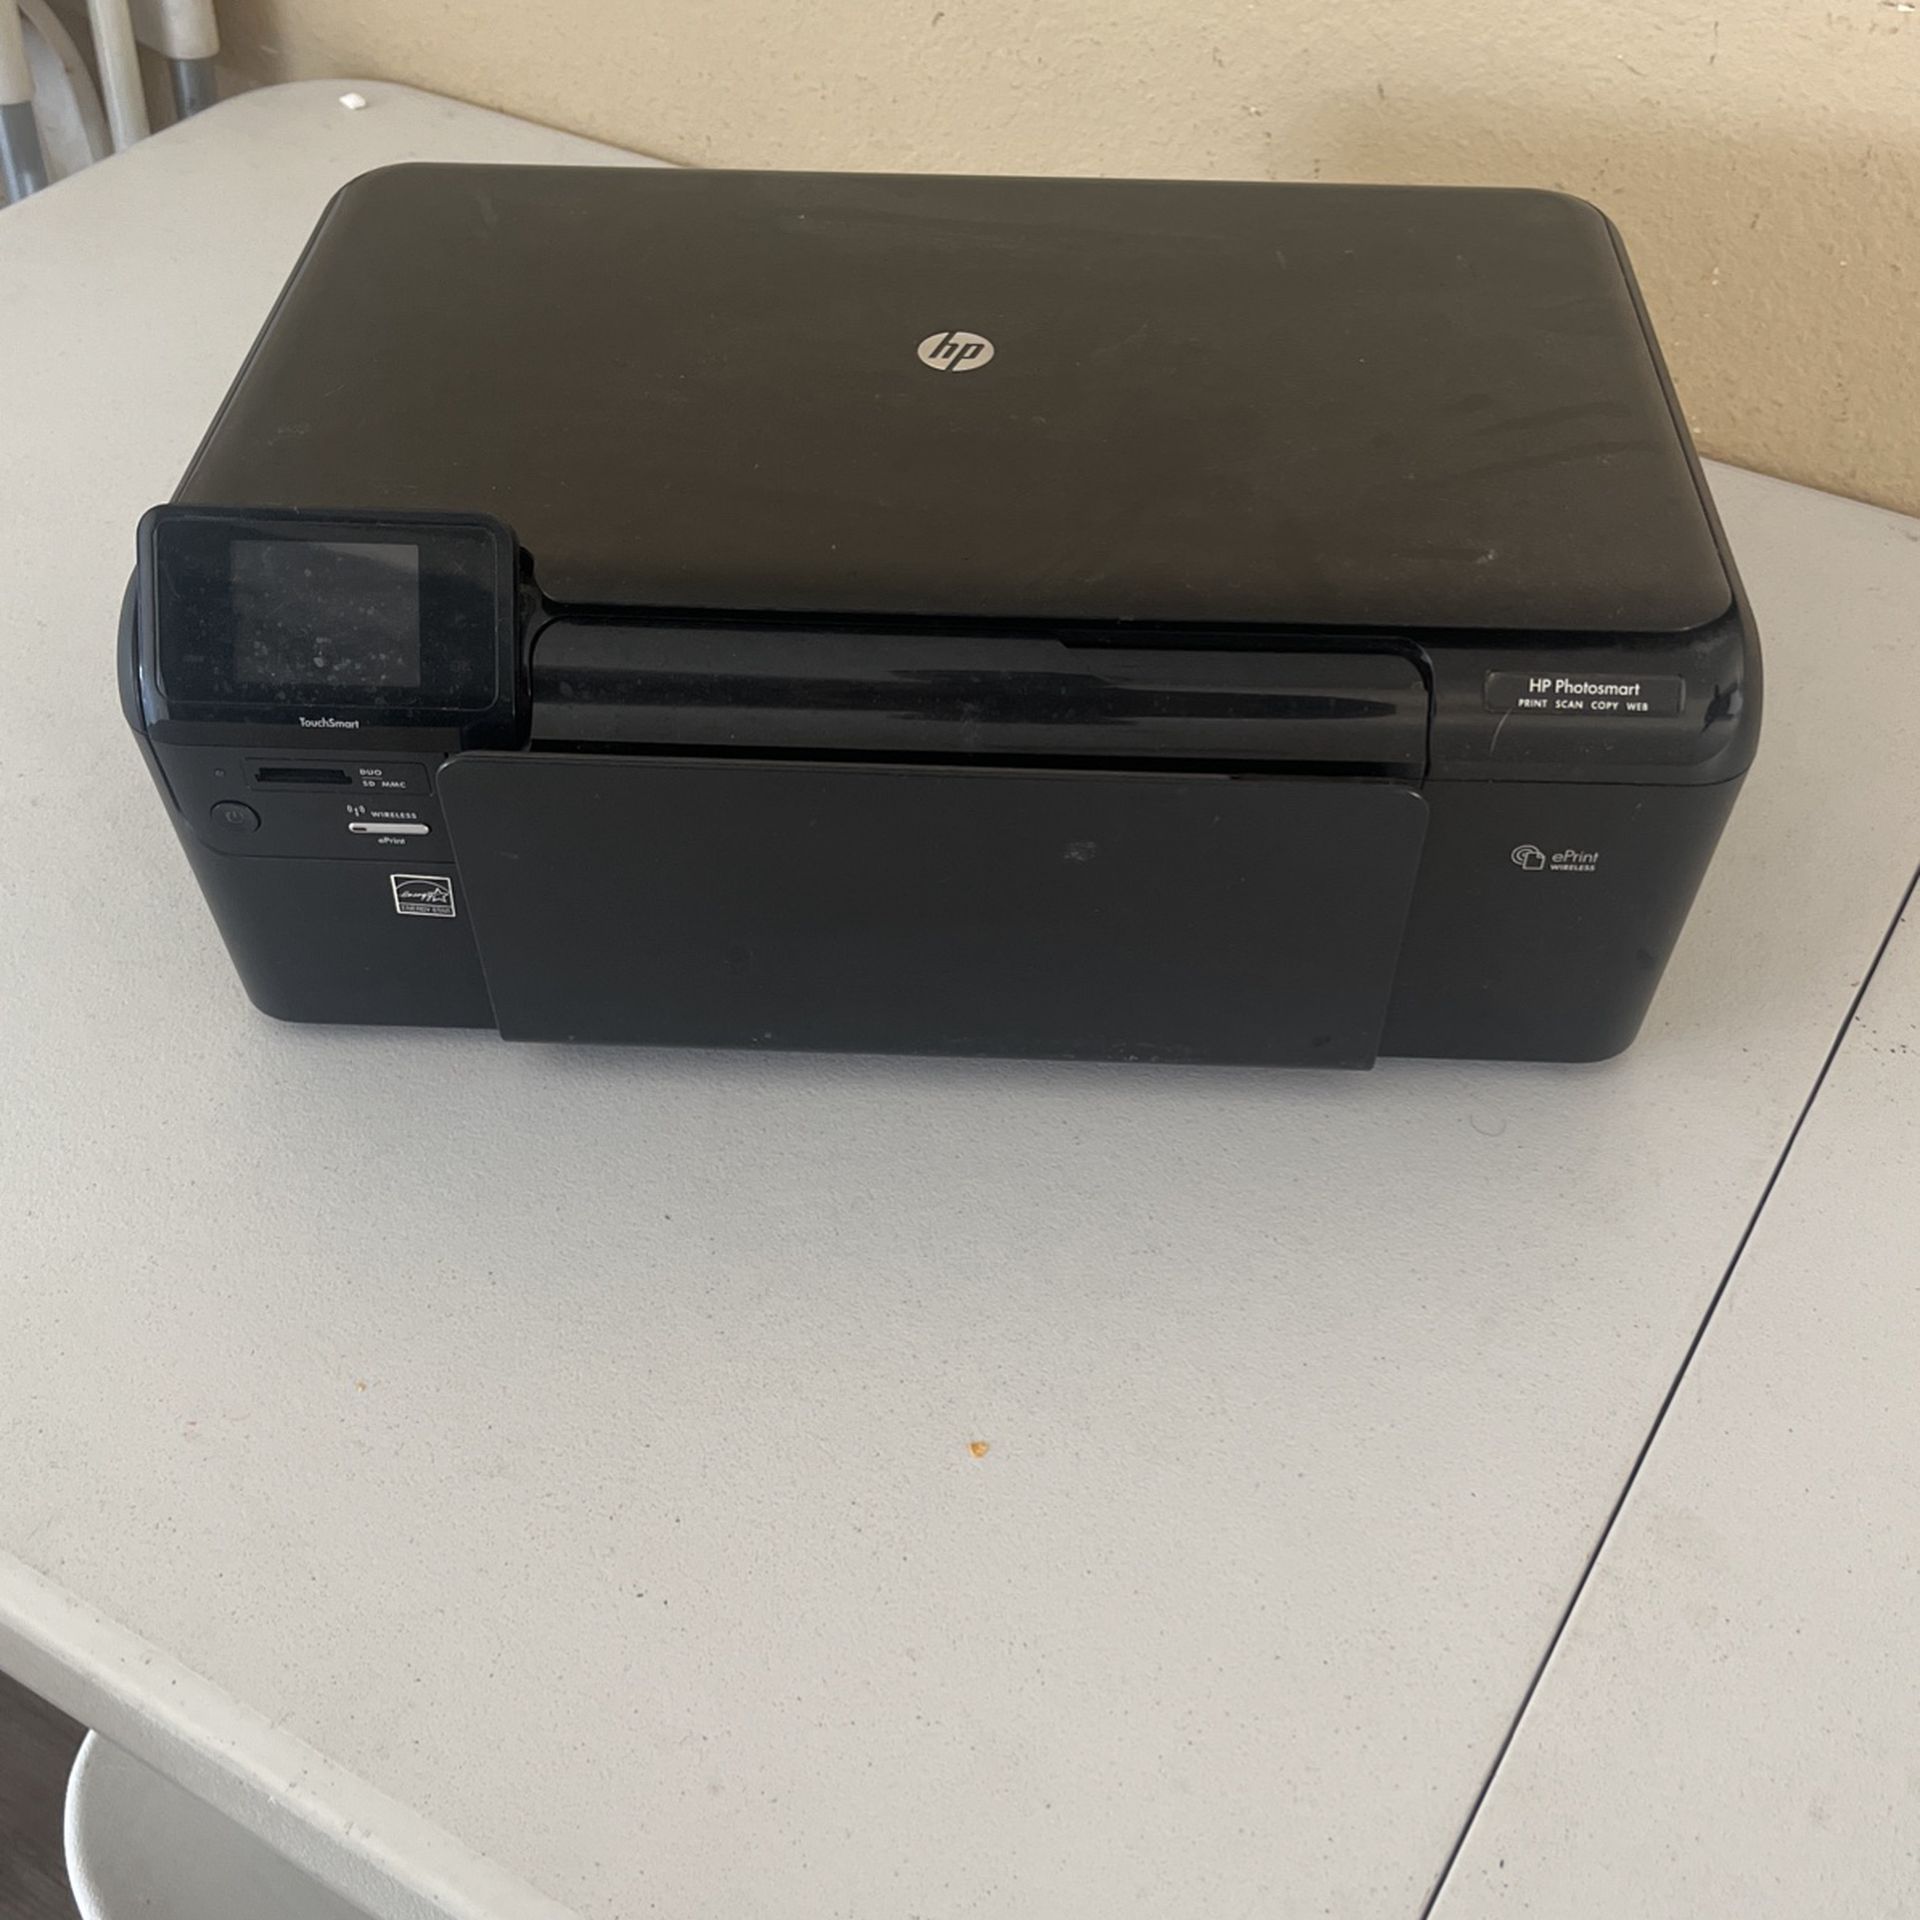 Scanner/printer